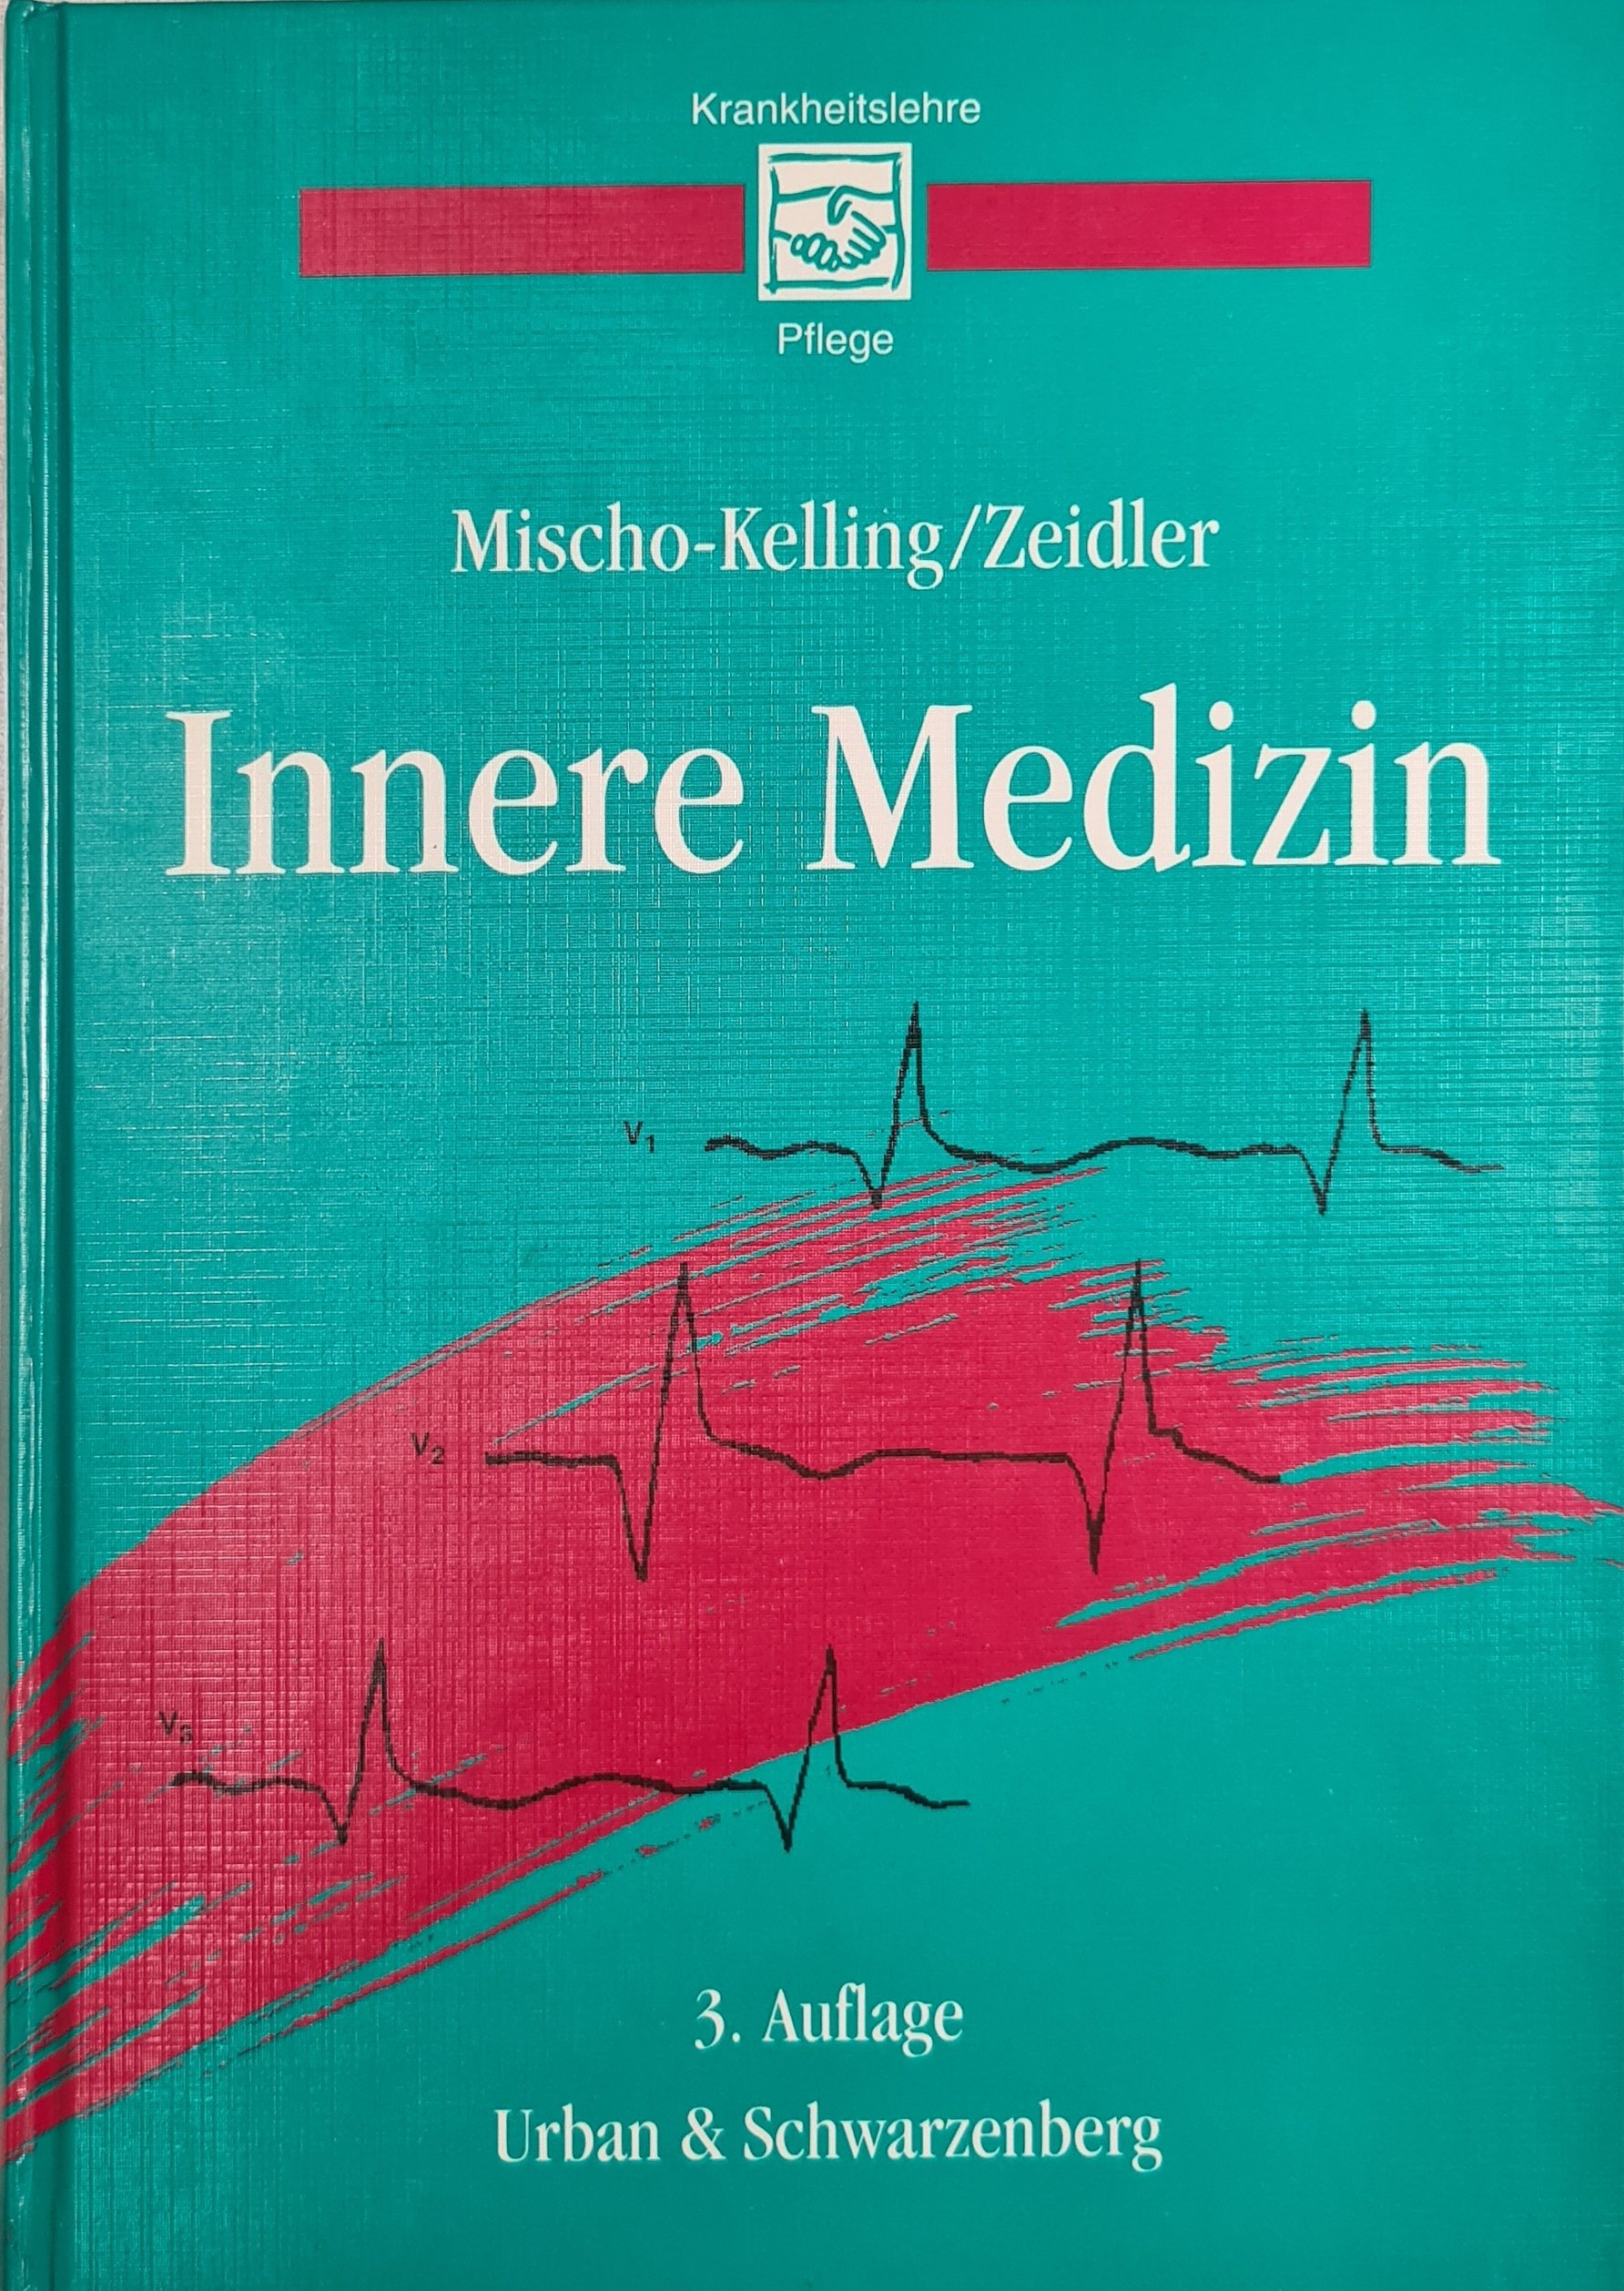 Innere Medizin (Krankenhausmuseum Bielefeld e.V. CC BY-NC-SA)